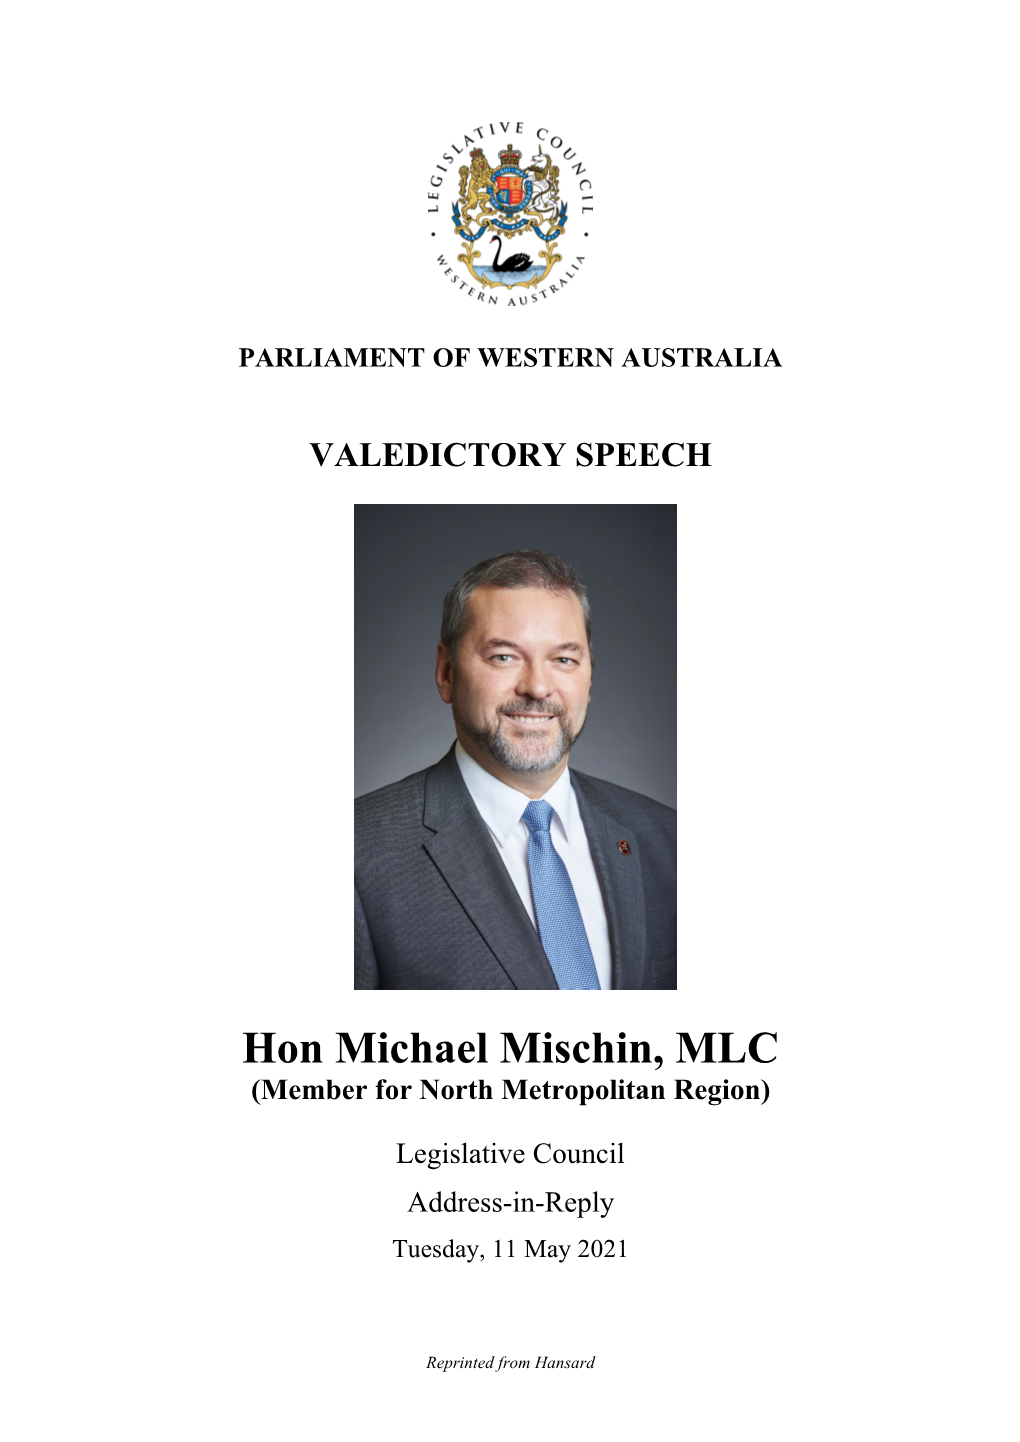 Hon Michael Mischin, MLC (Member for North Metropolitan Region)